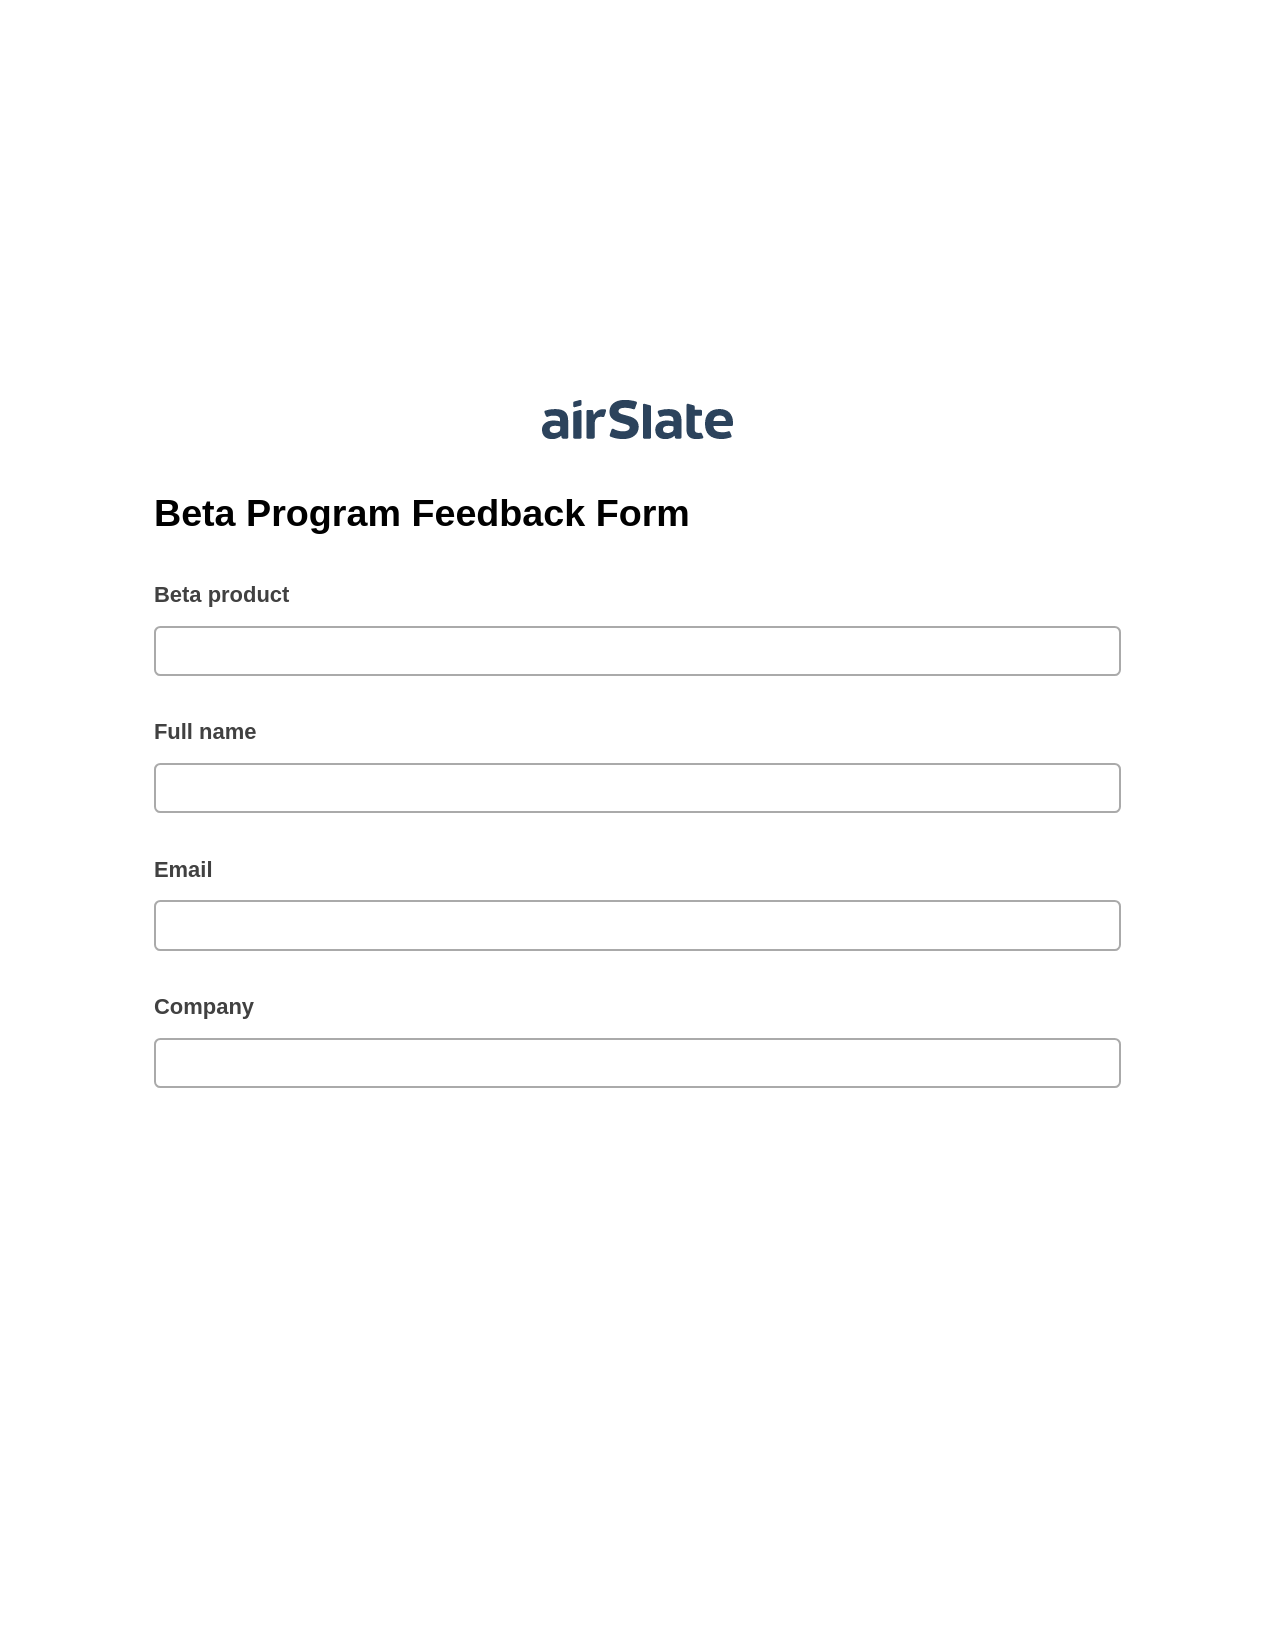 Multirole Beta Program Feedback Form Pre-fill from CSV File Bot, Create slate addon, Box Bot